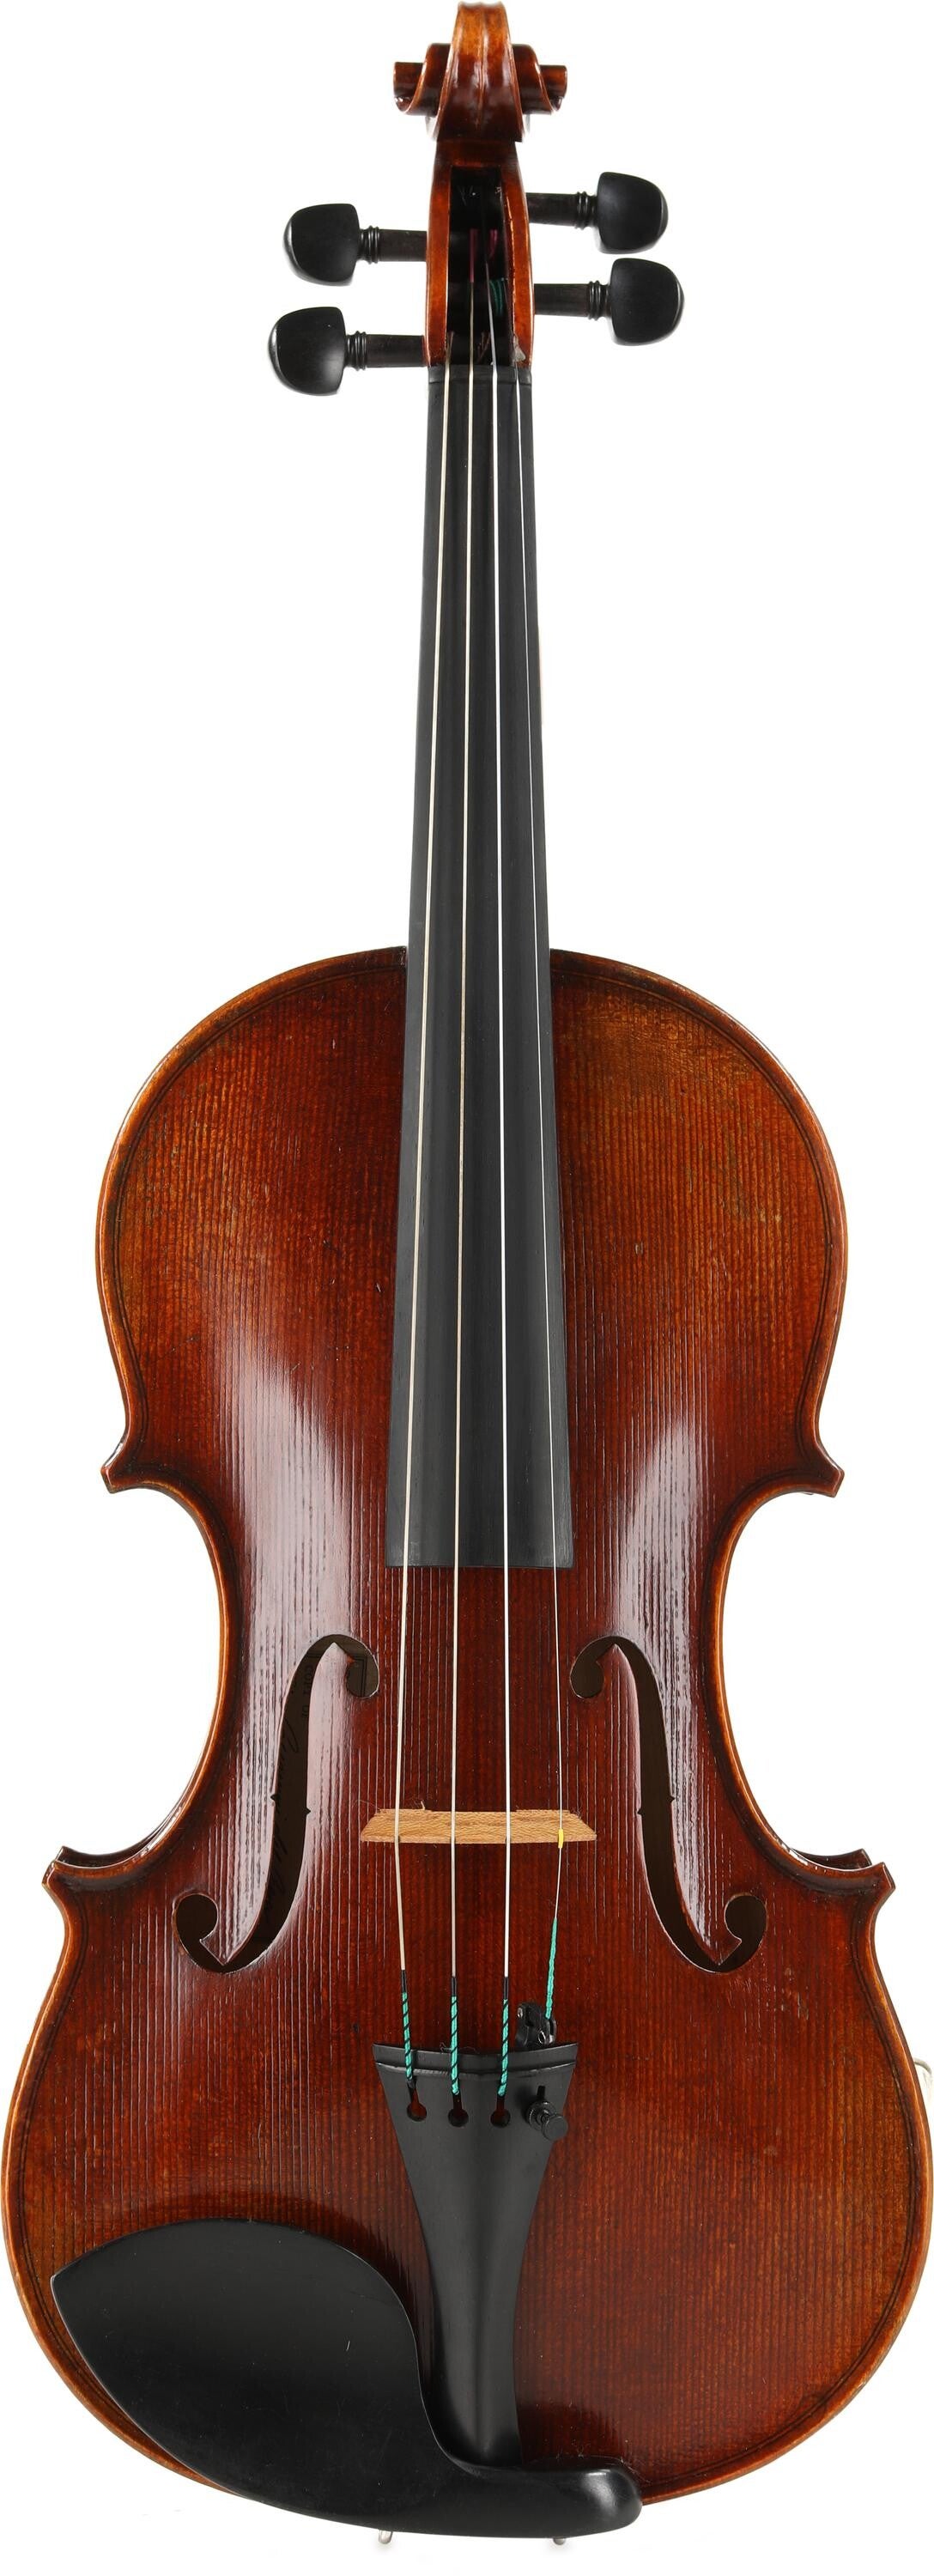 Eastman VL701 Rudoulf Doetsch Professional Violin - 4/4 Size